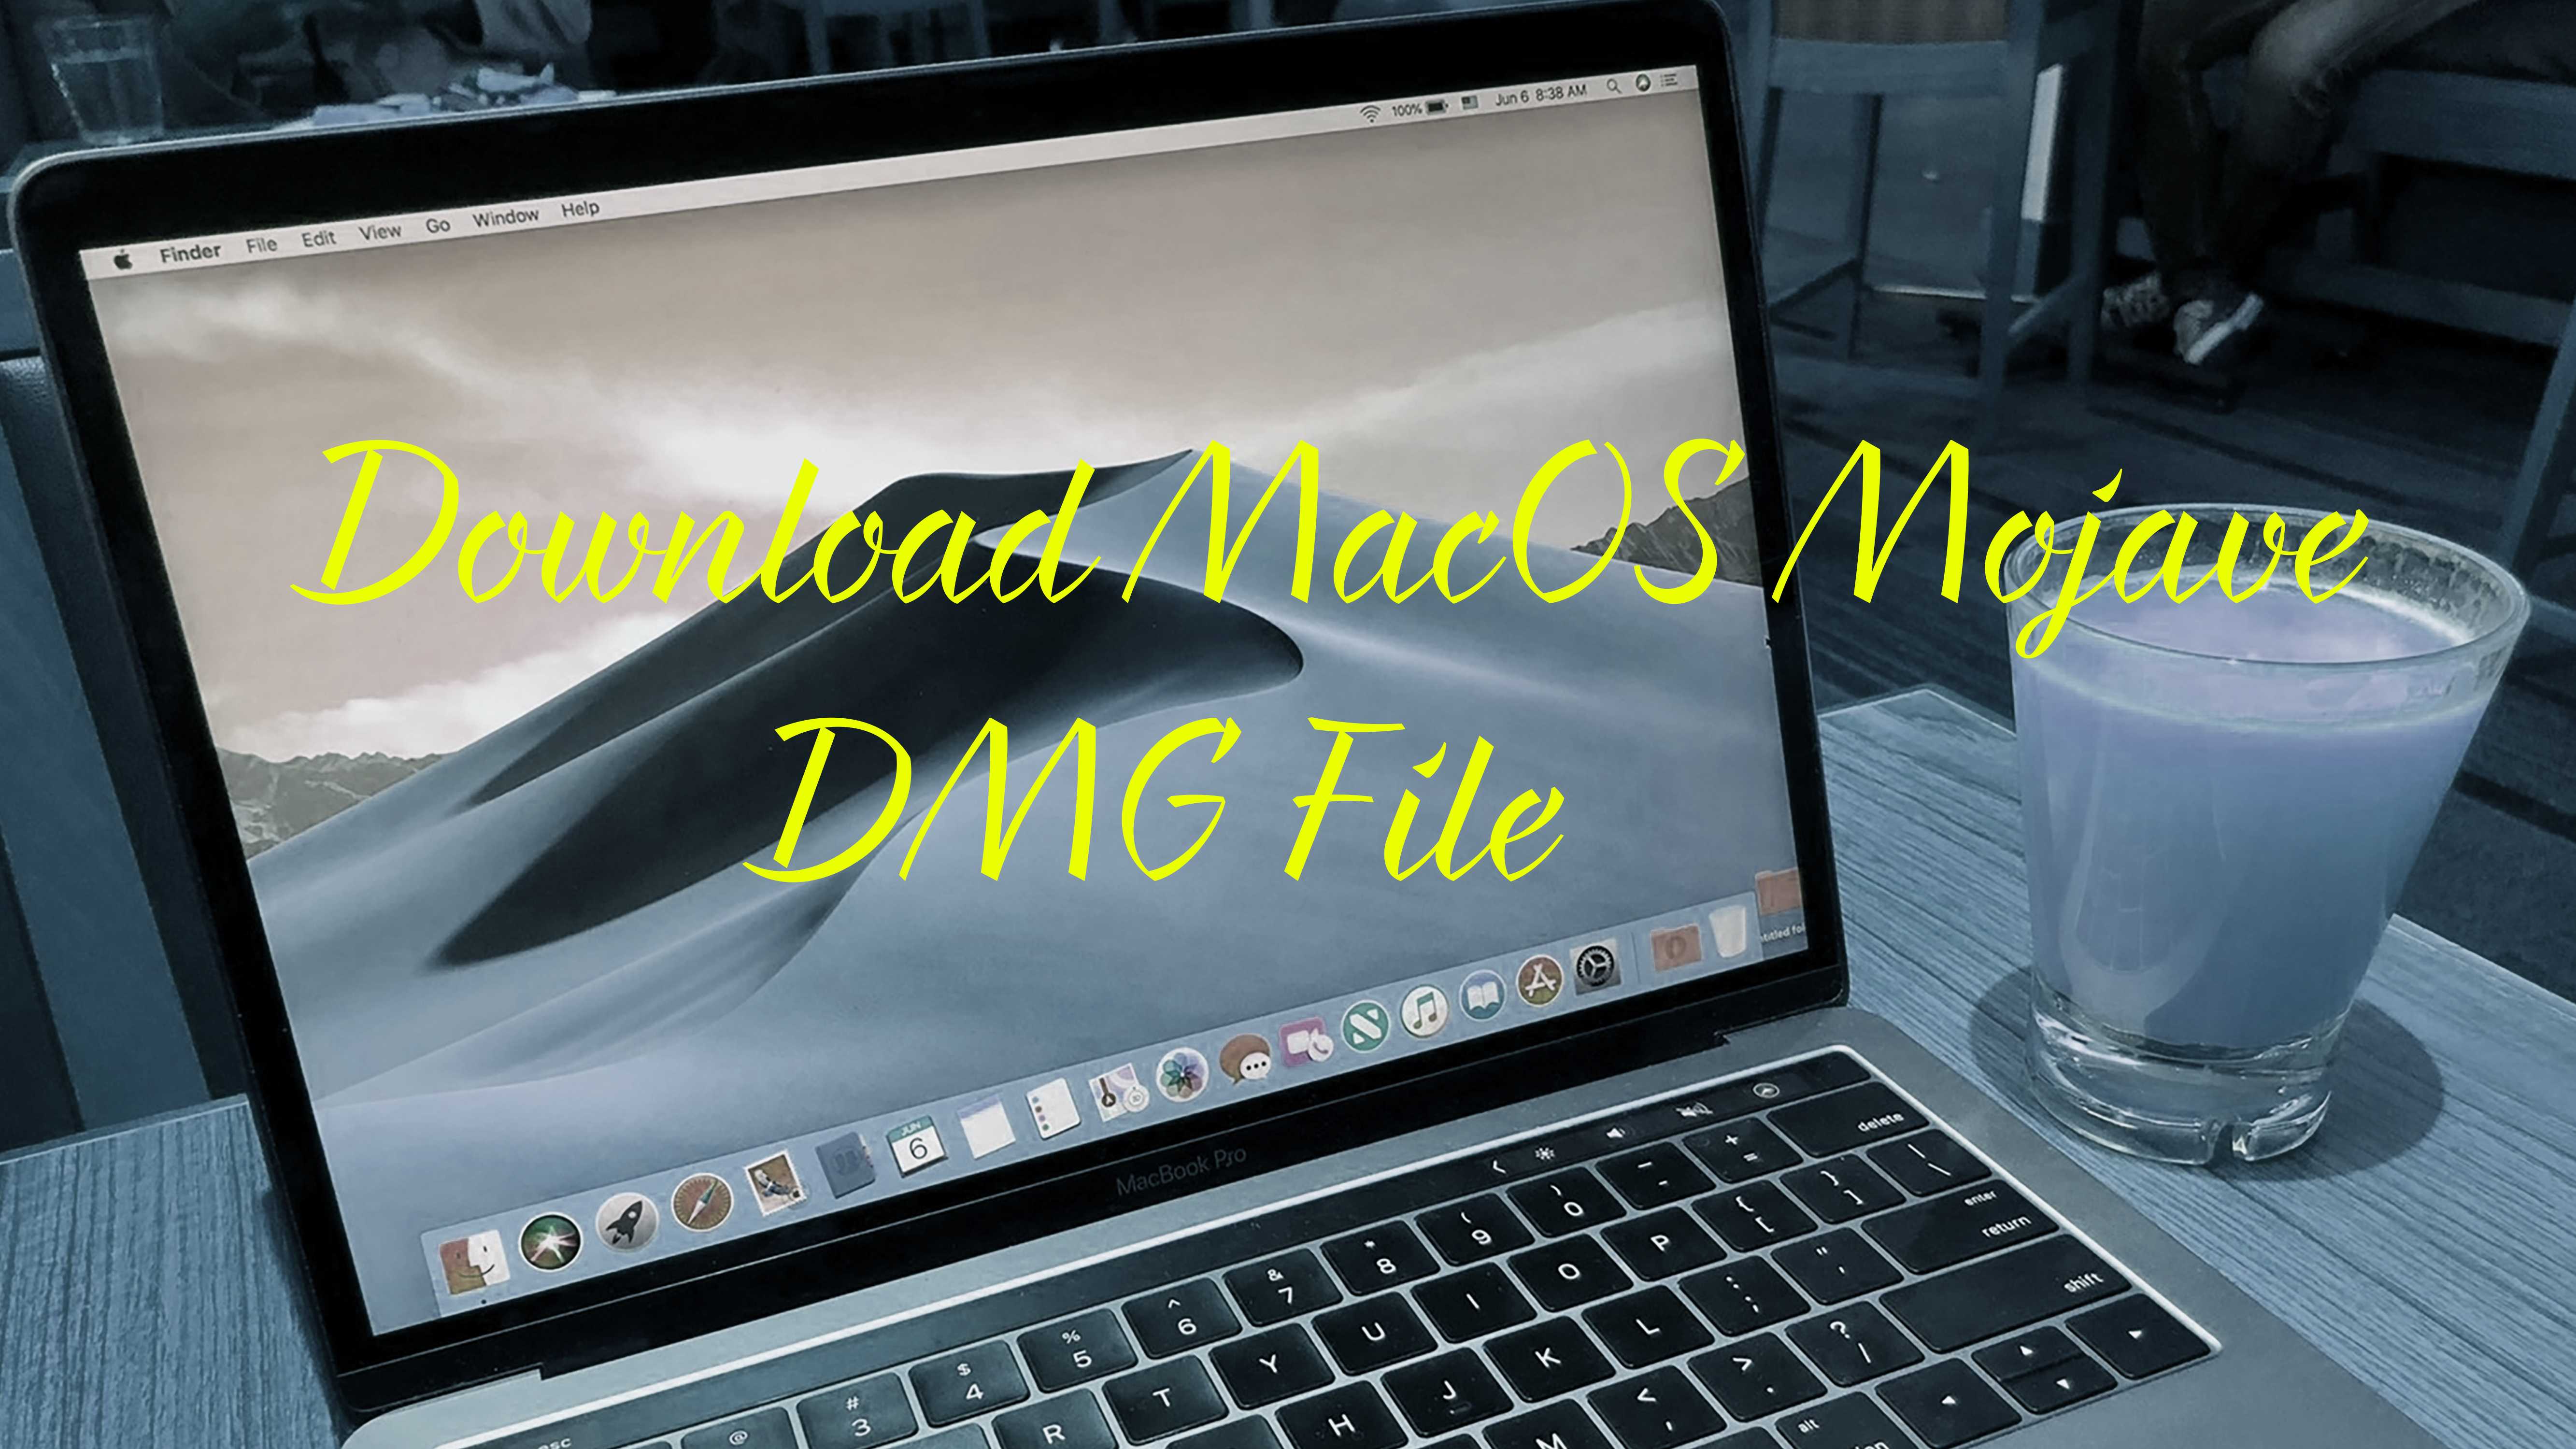 Download macos mojave dmg on windows 6